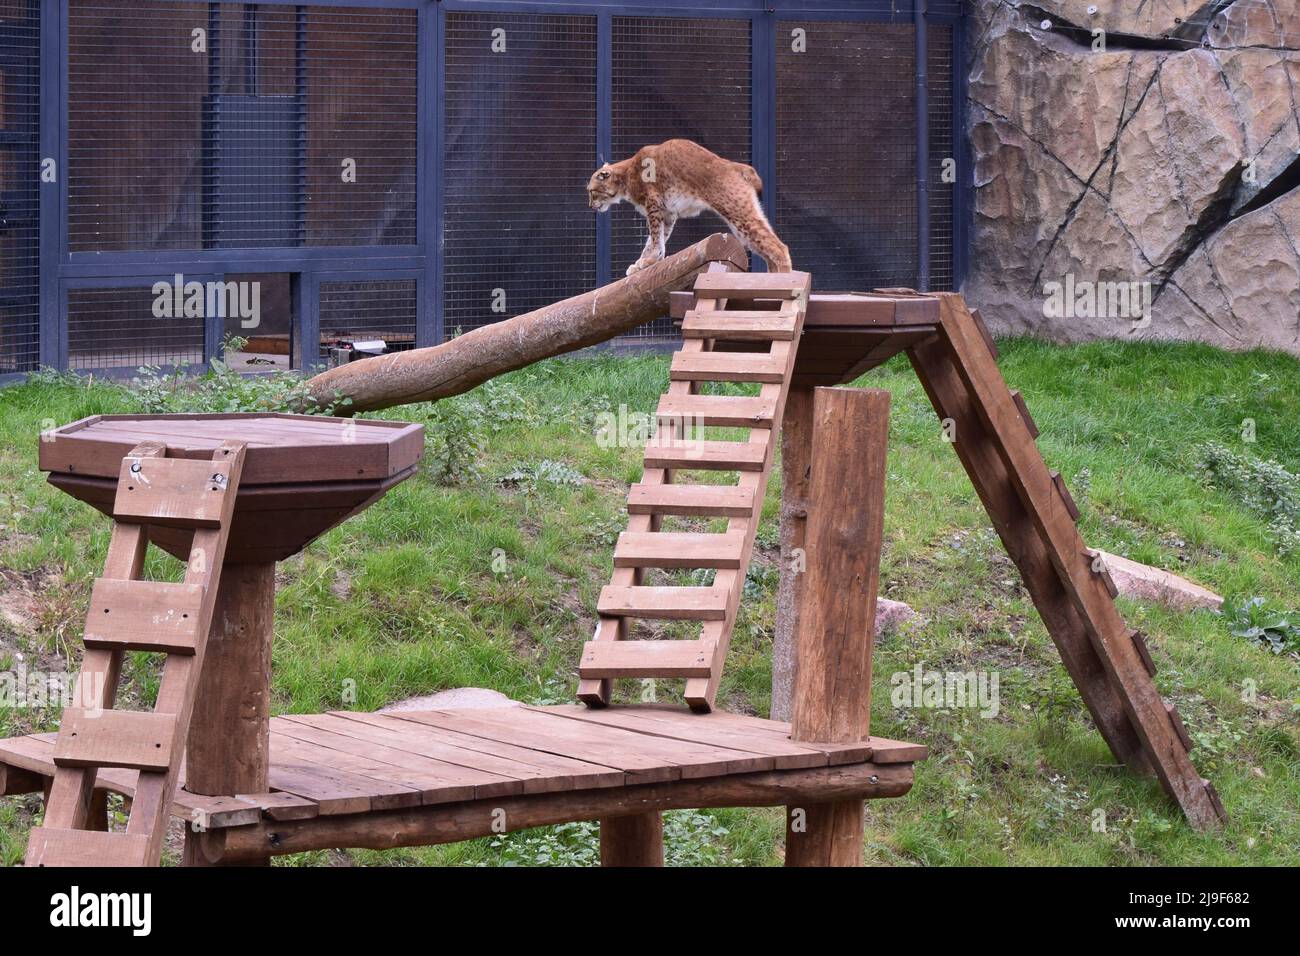 Wild predatory dangerous cat. Lynx in a zoo. Stock Photo